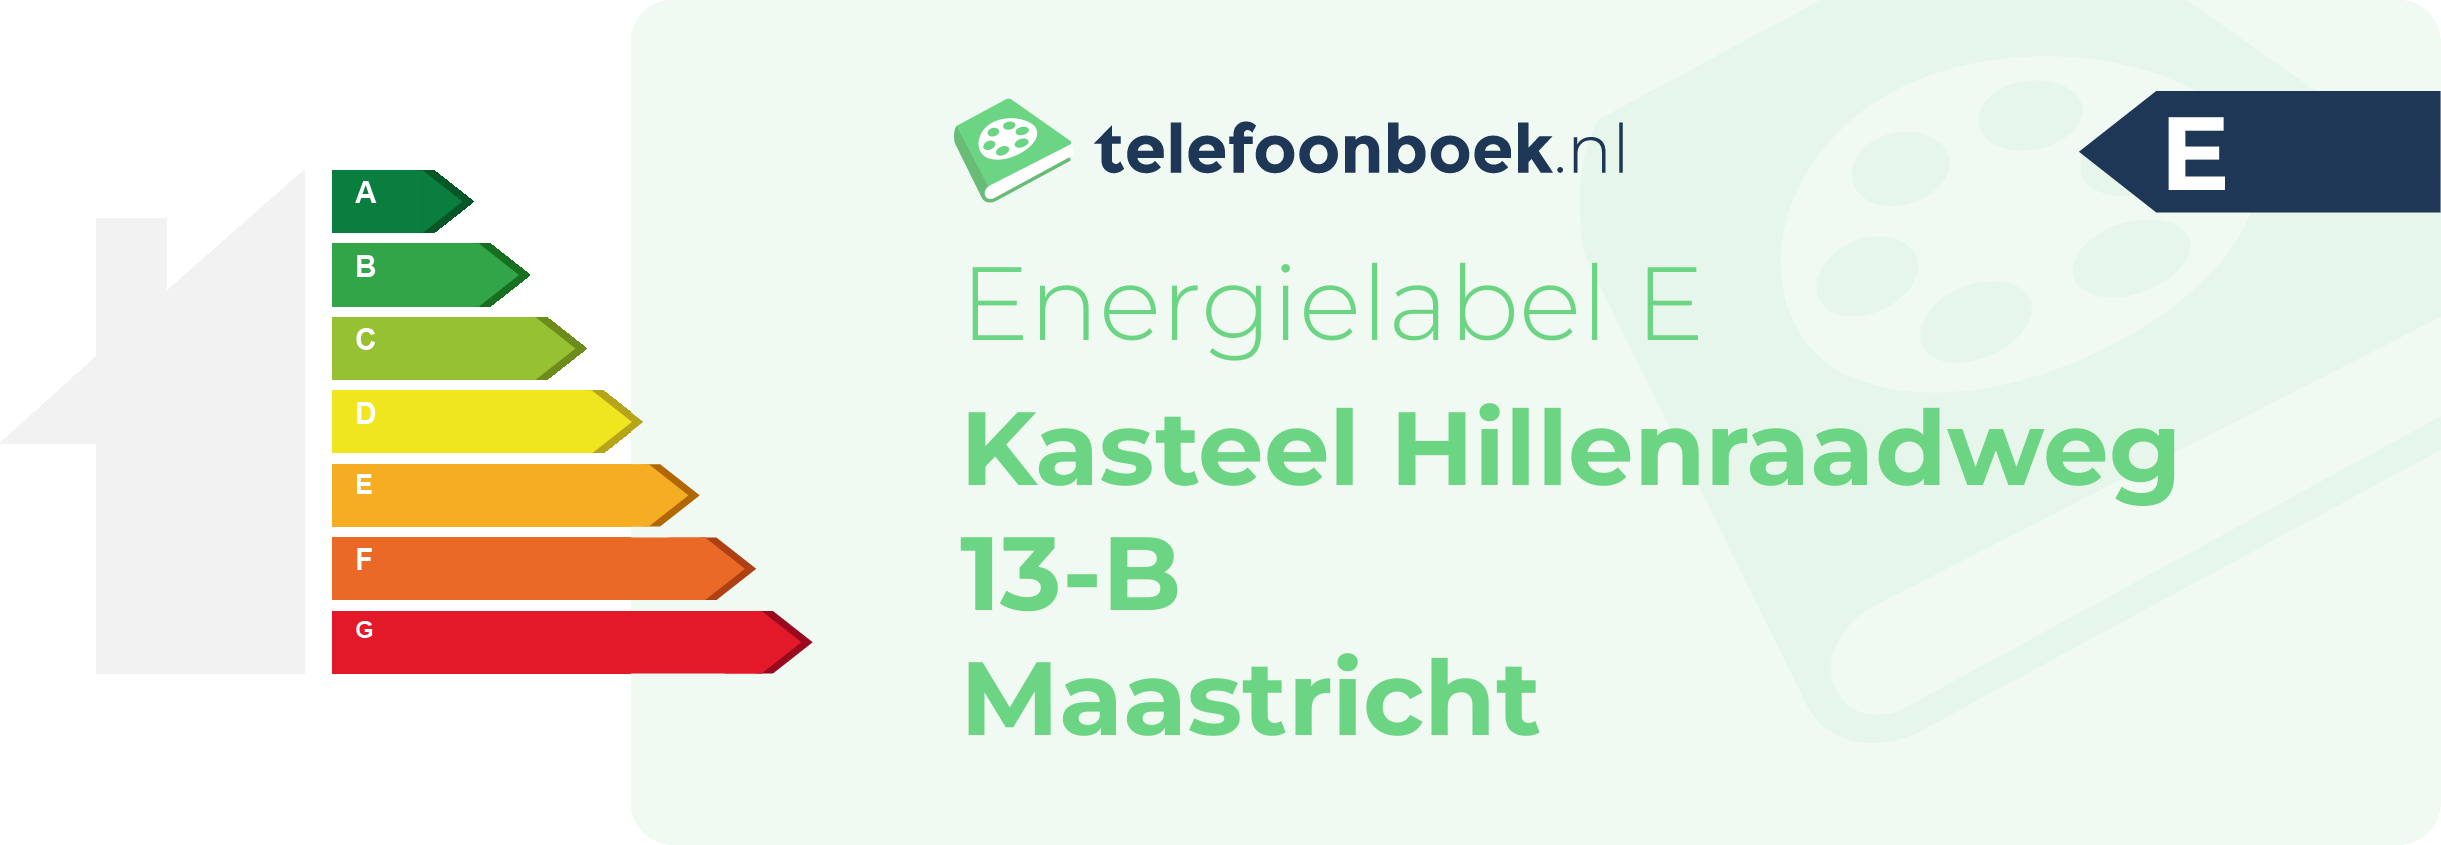 Energielabel Kasteel Hillenraadweg 13-B Maastricht